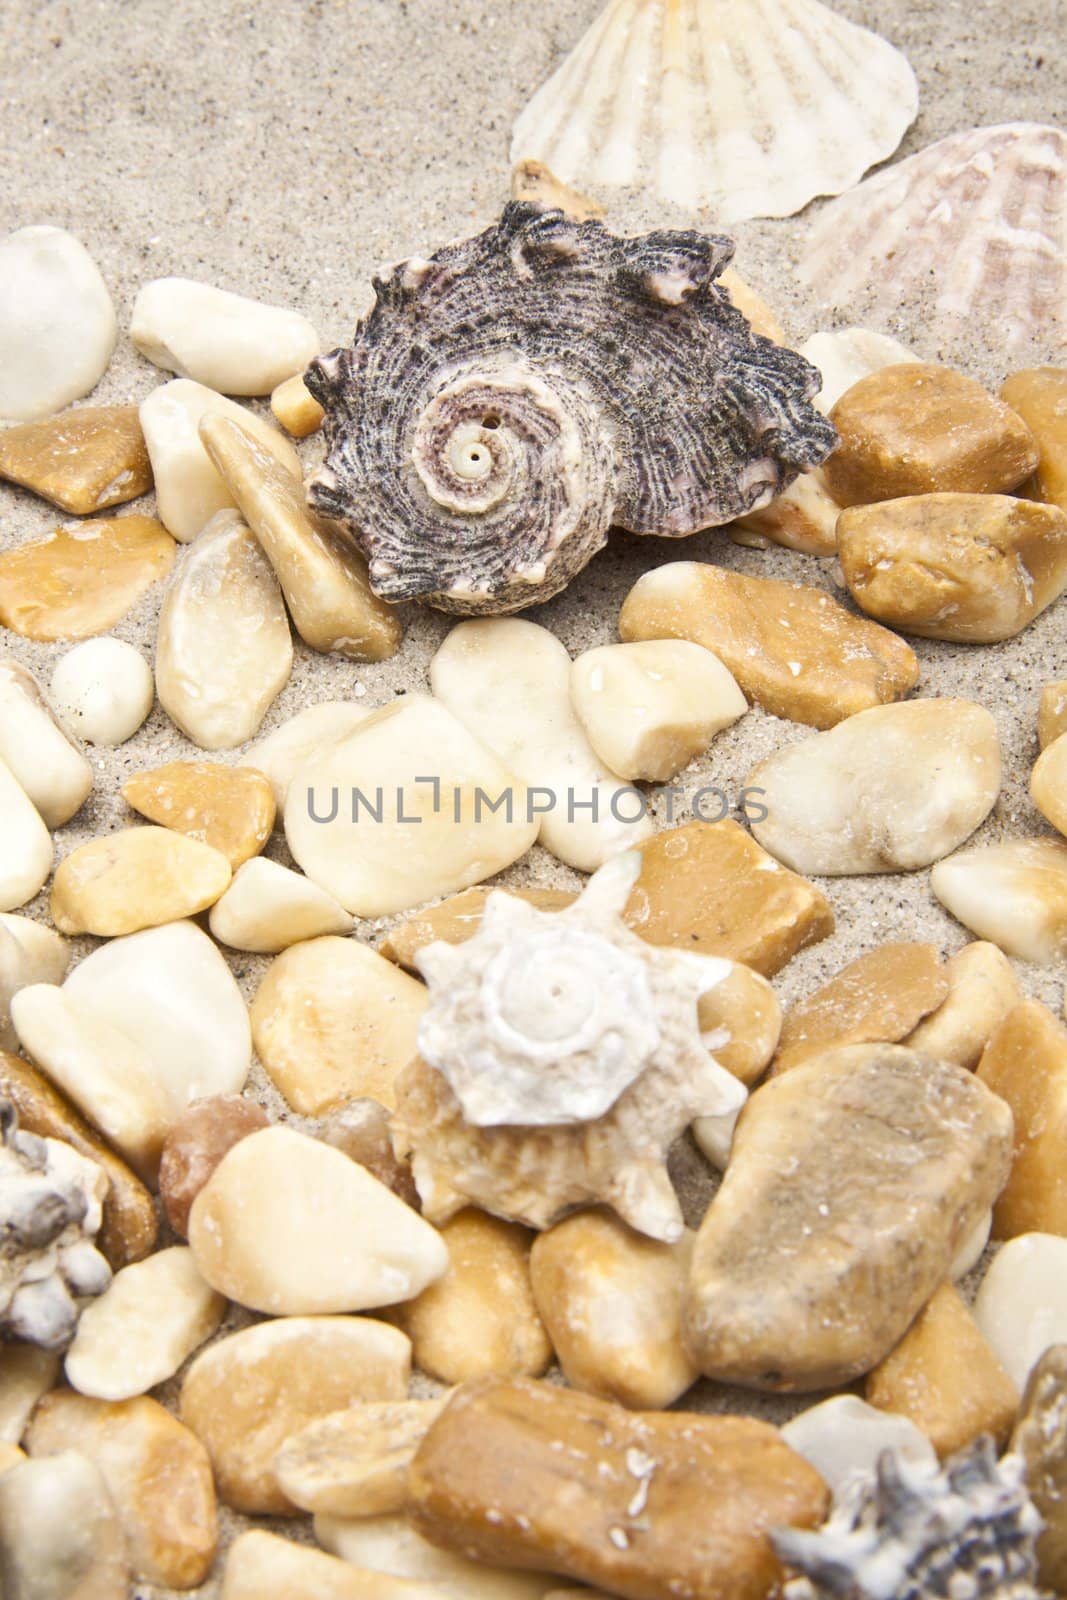 Sea shells and stones by ozaiachin